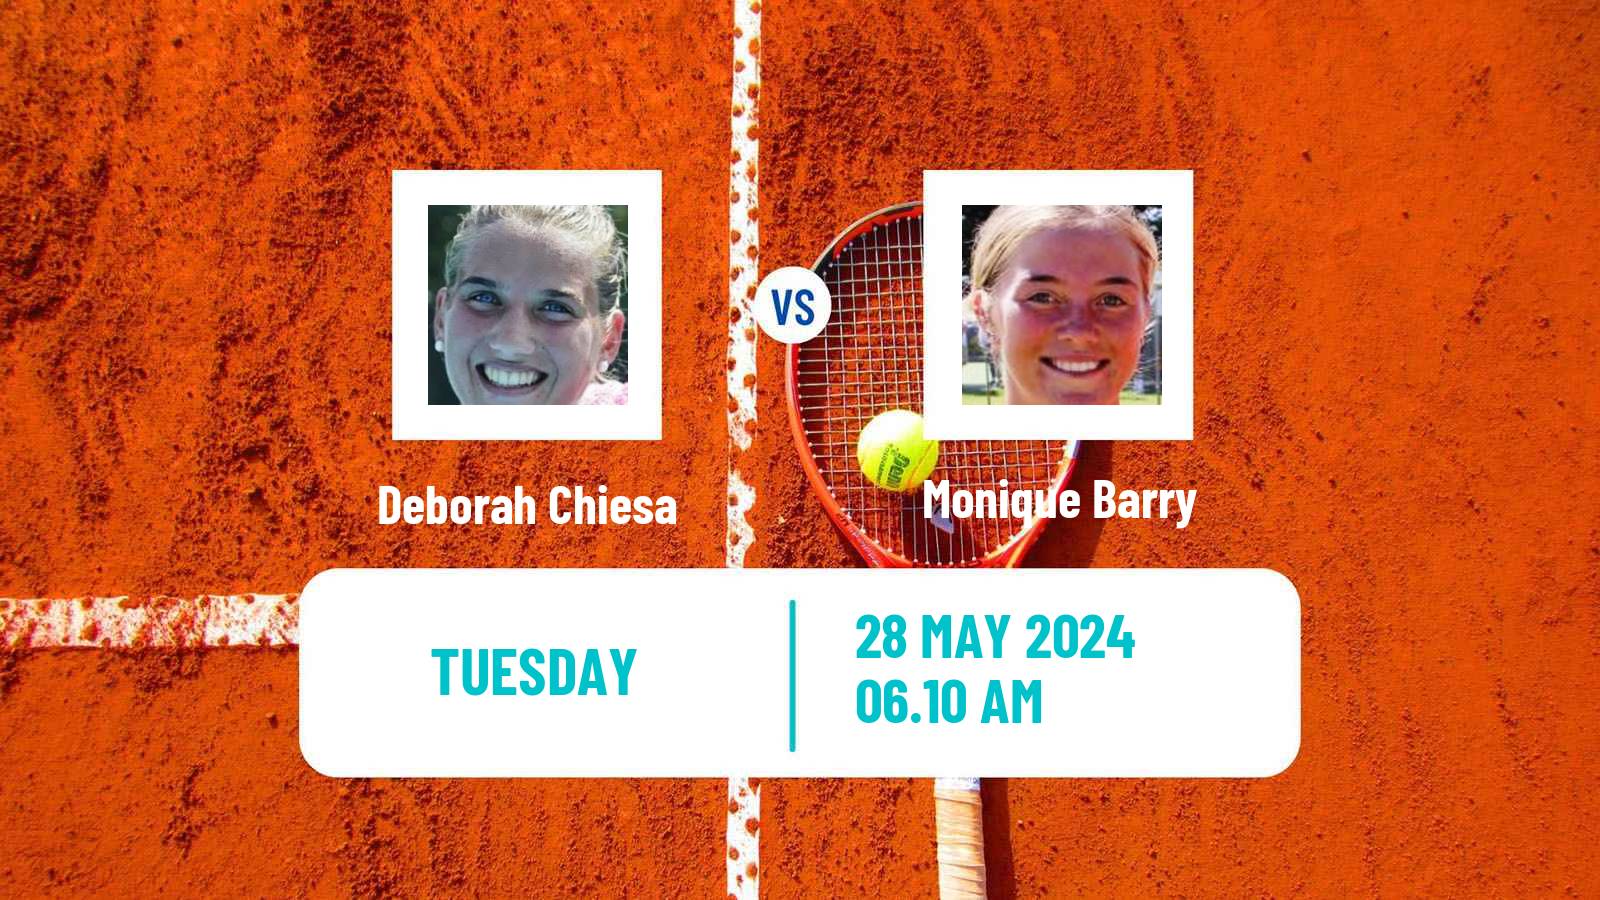 Tennis ITF W50 Otocec 2 Women Deborah Chiesa - Monique Barry